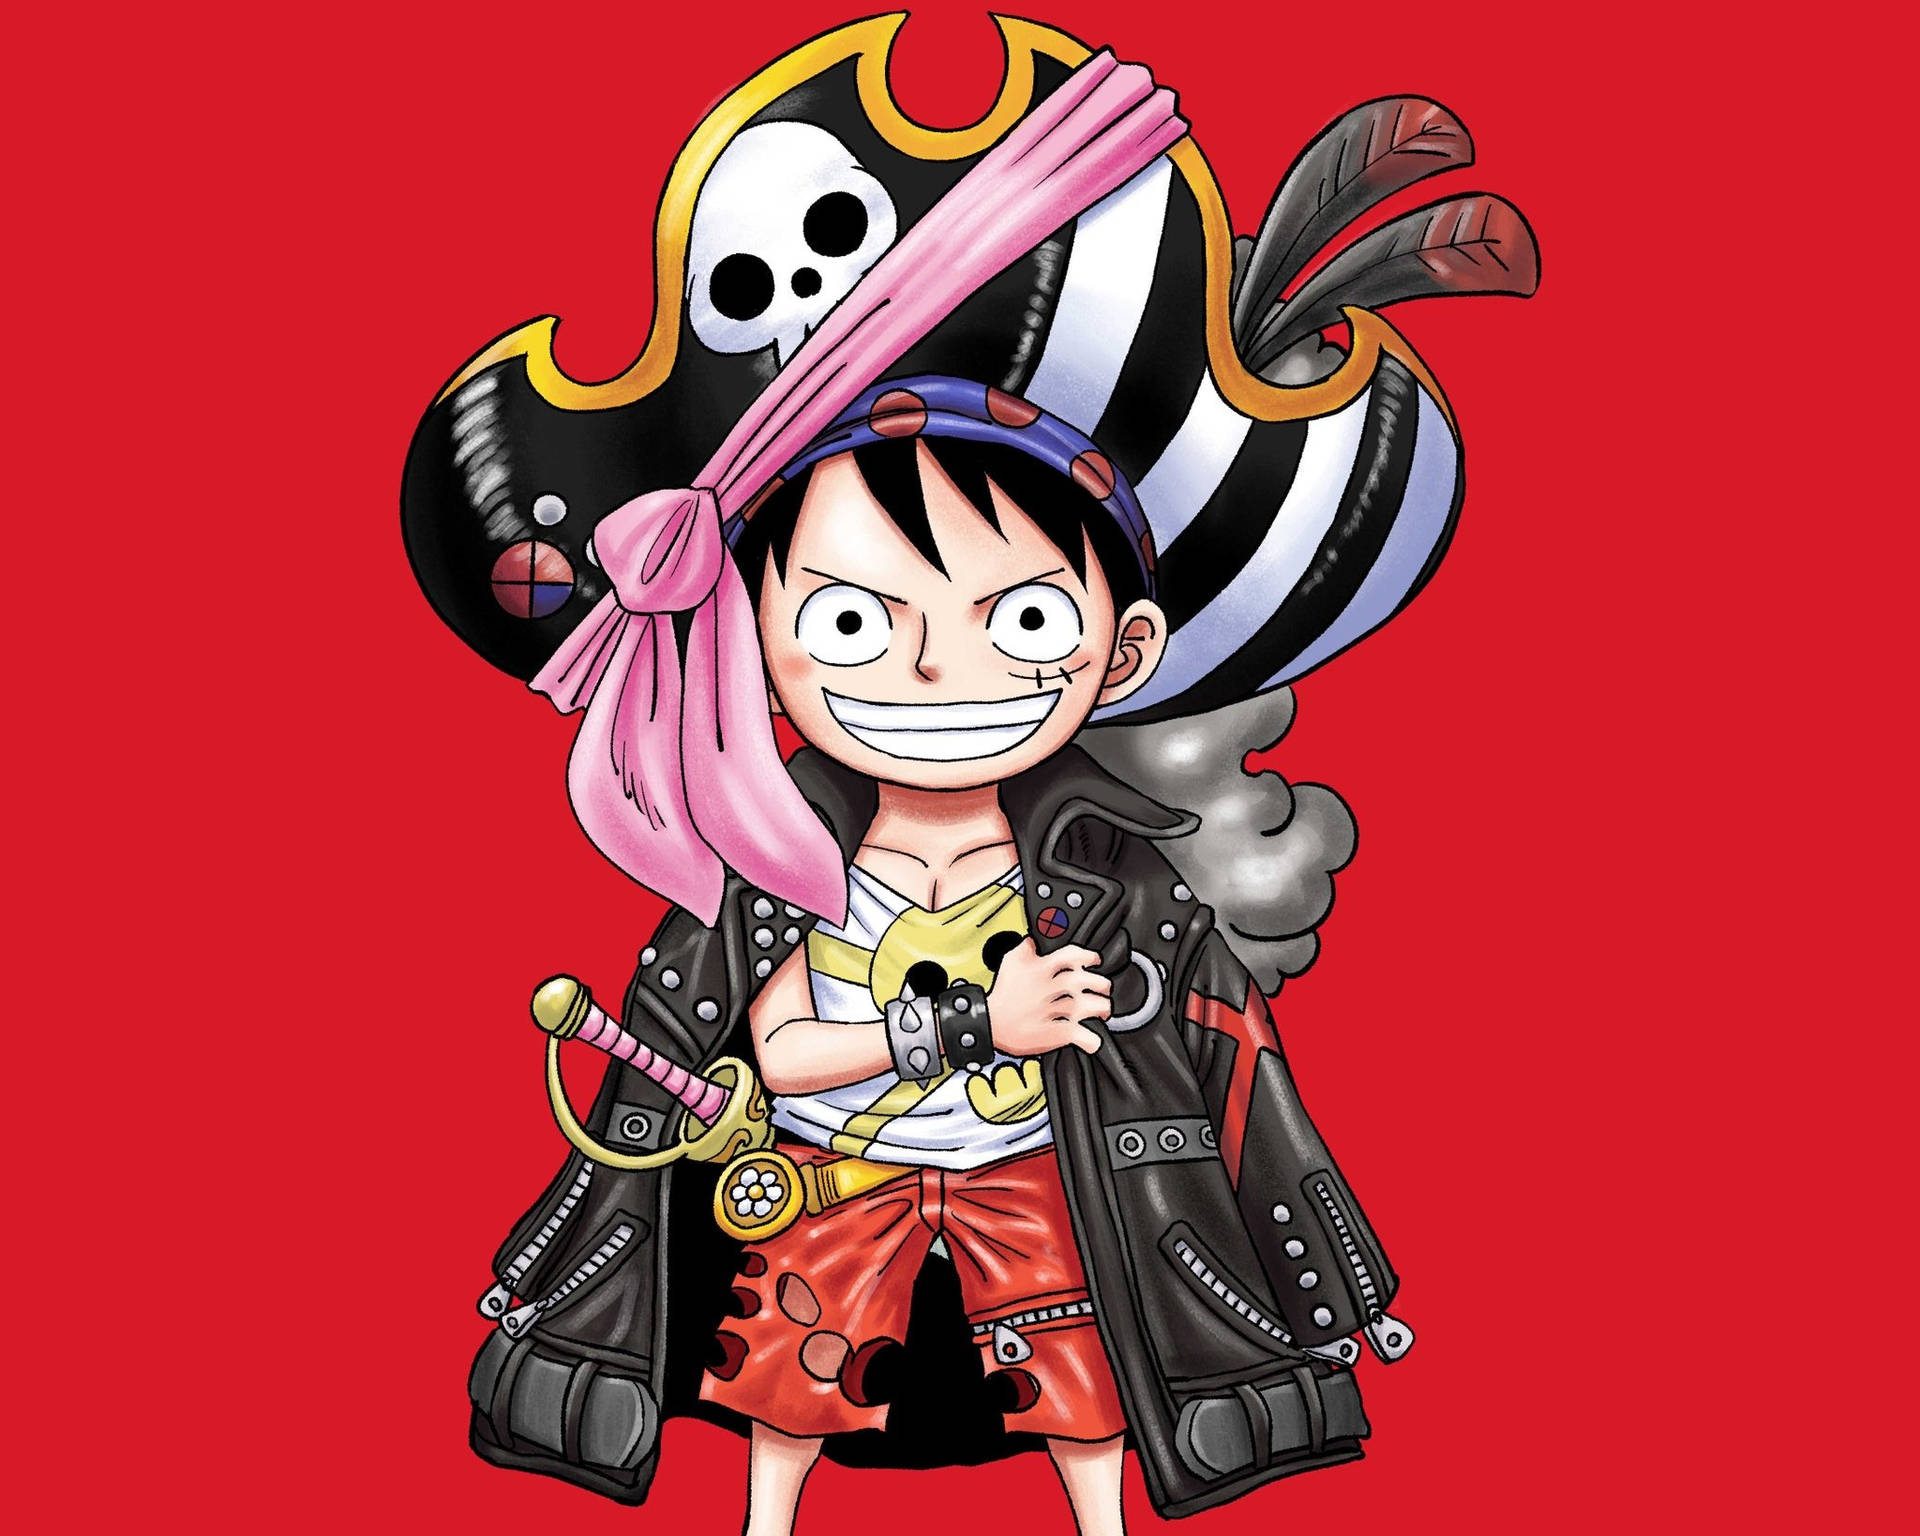 Free One Piece Pfp Wallpaper Downloads, [100+] One Piece Pfp ...